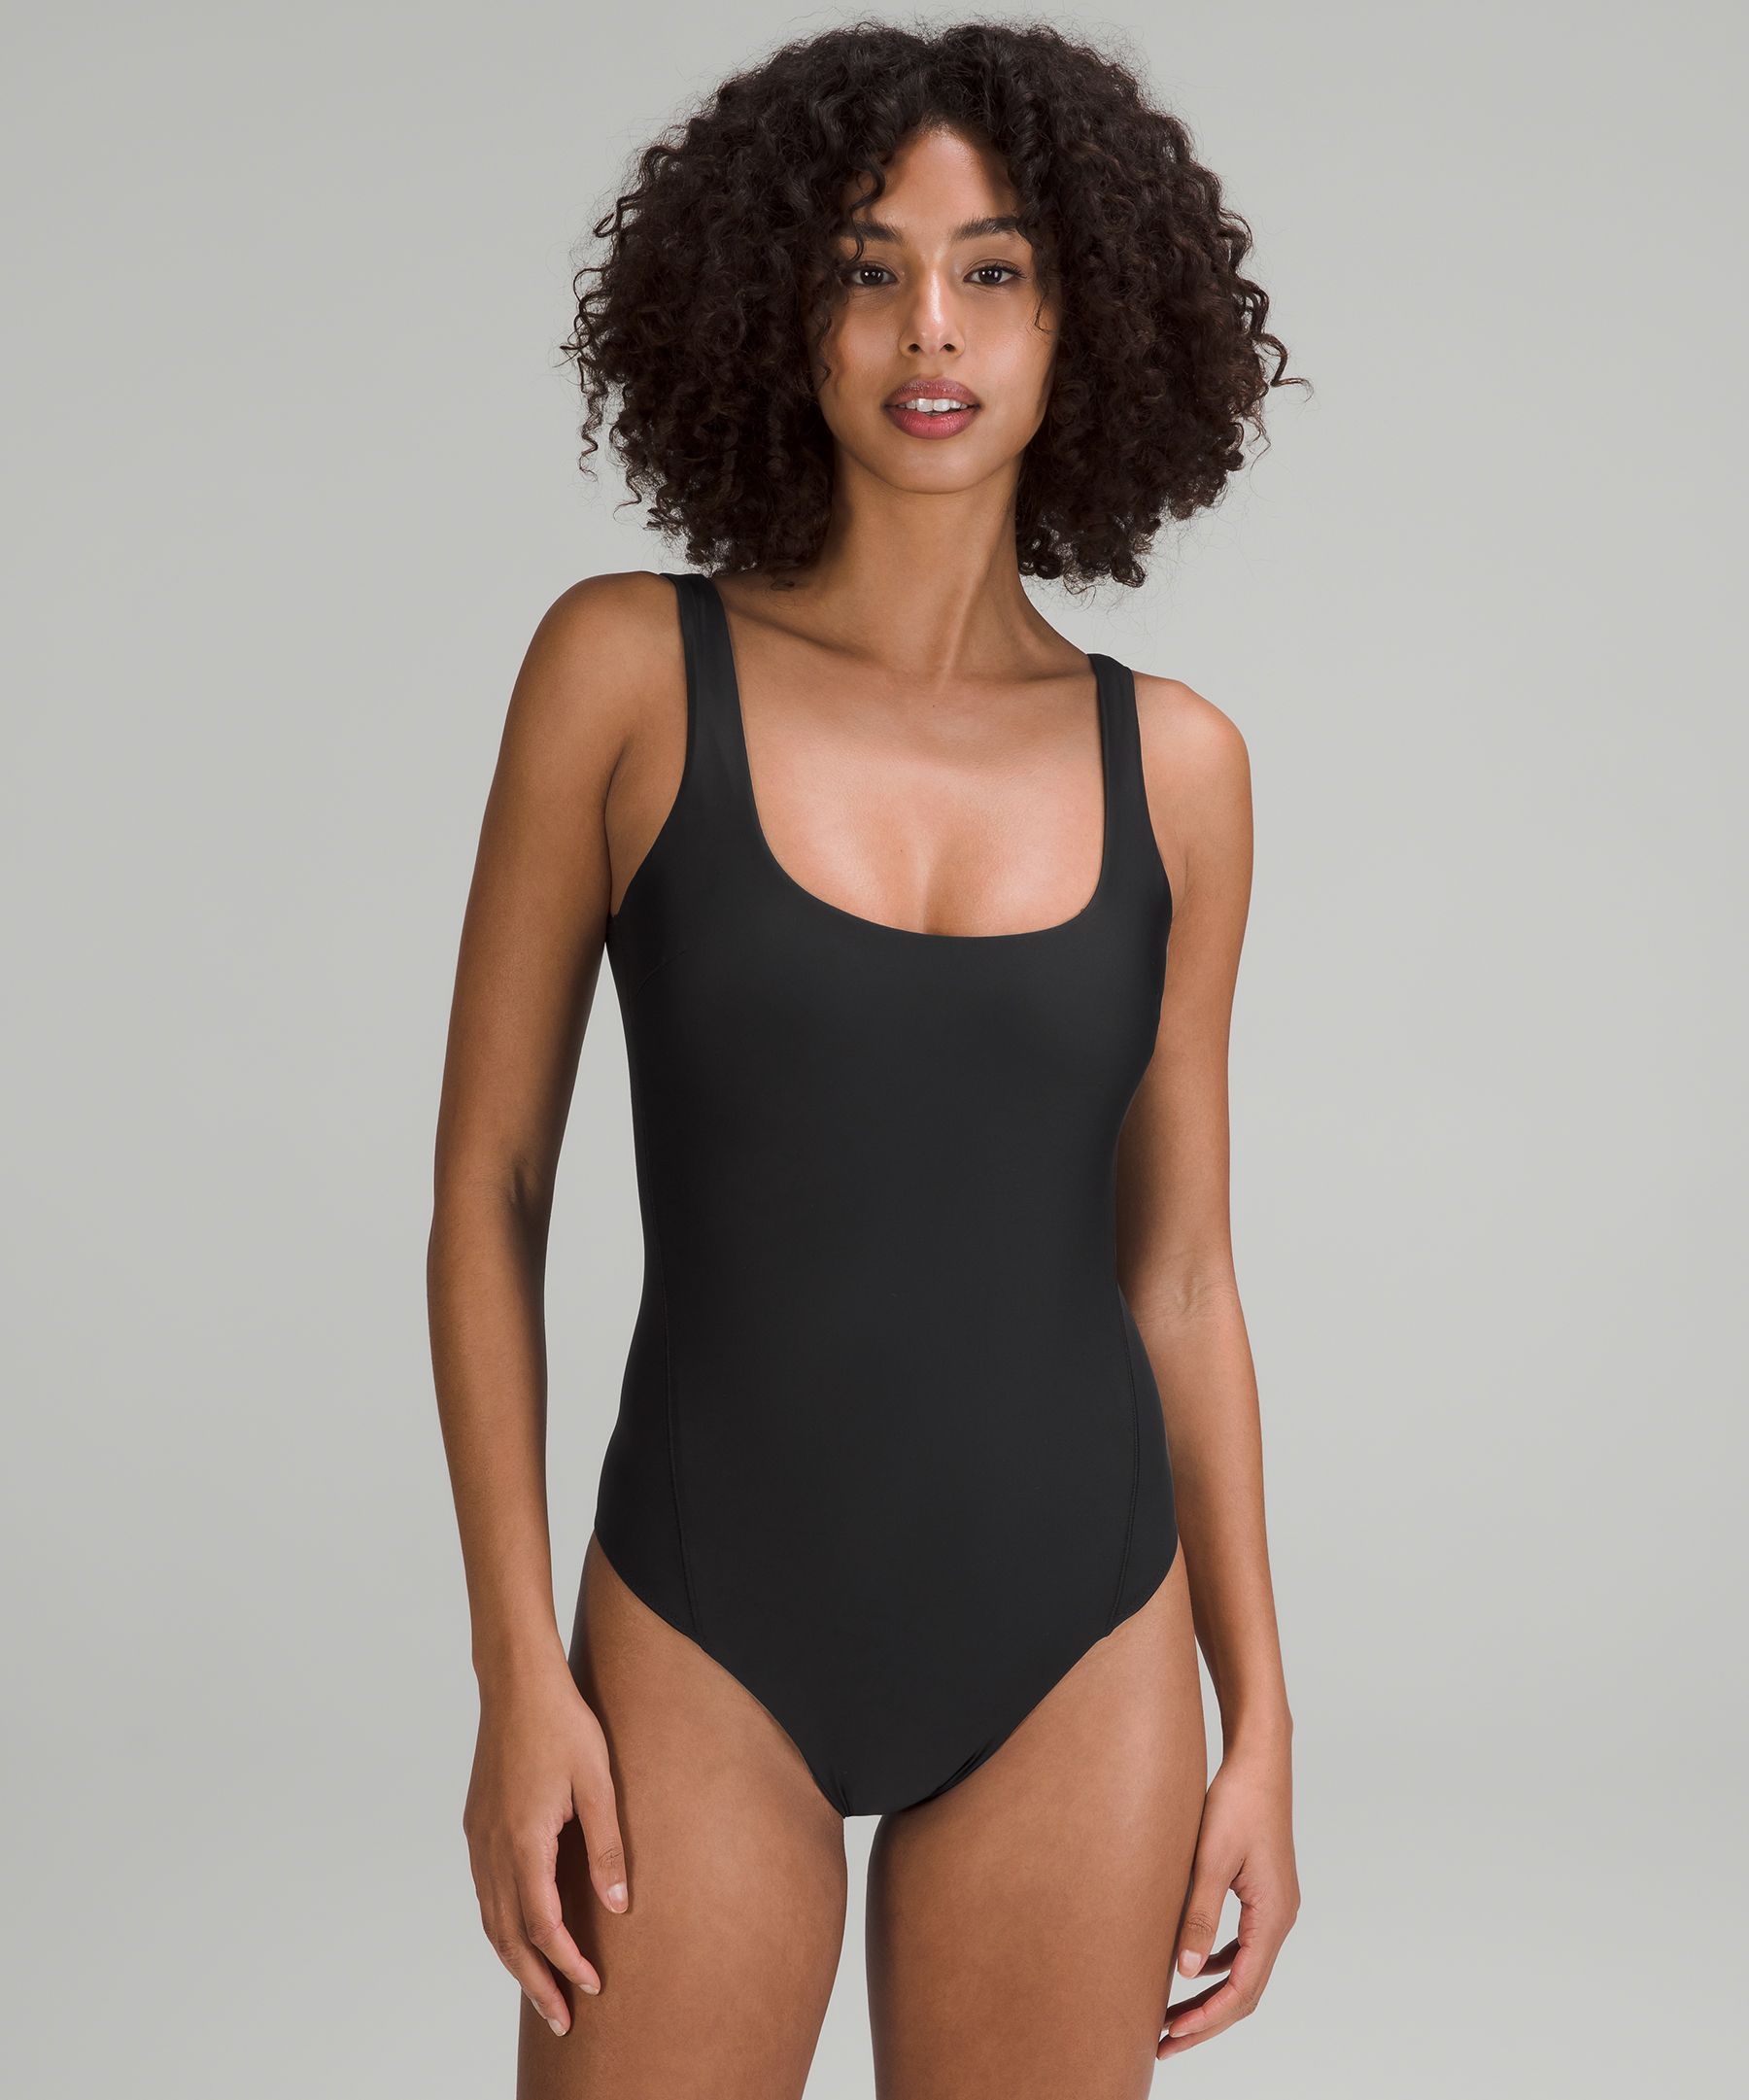 Waterside Scoop One-Piece Swimsuit on Soft Denim : r/lululemon